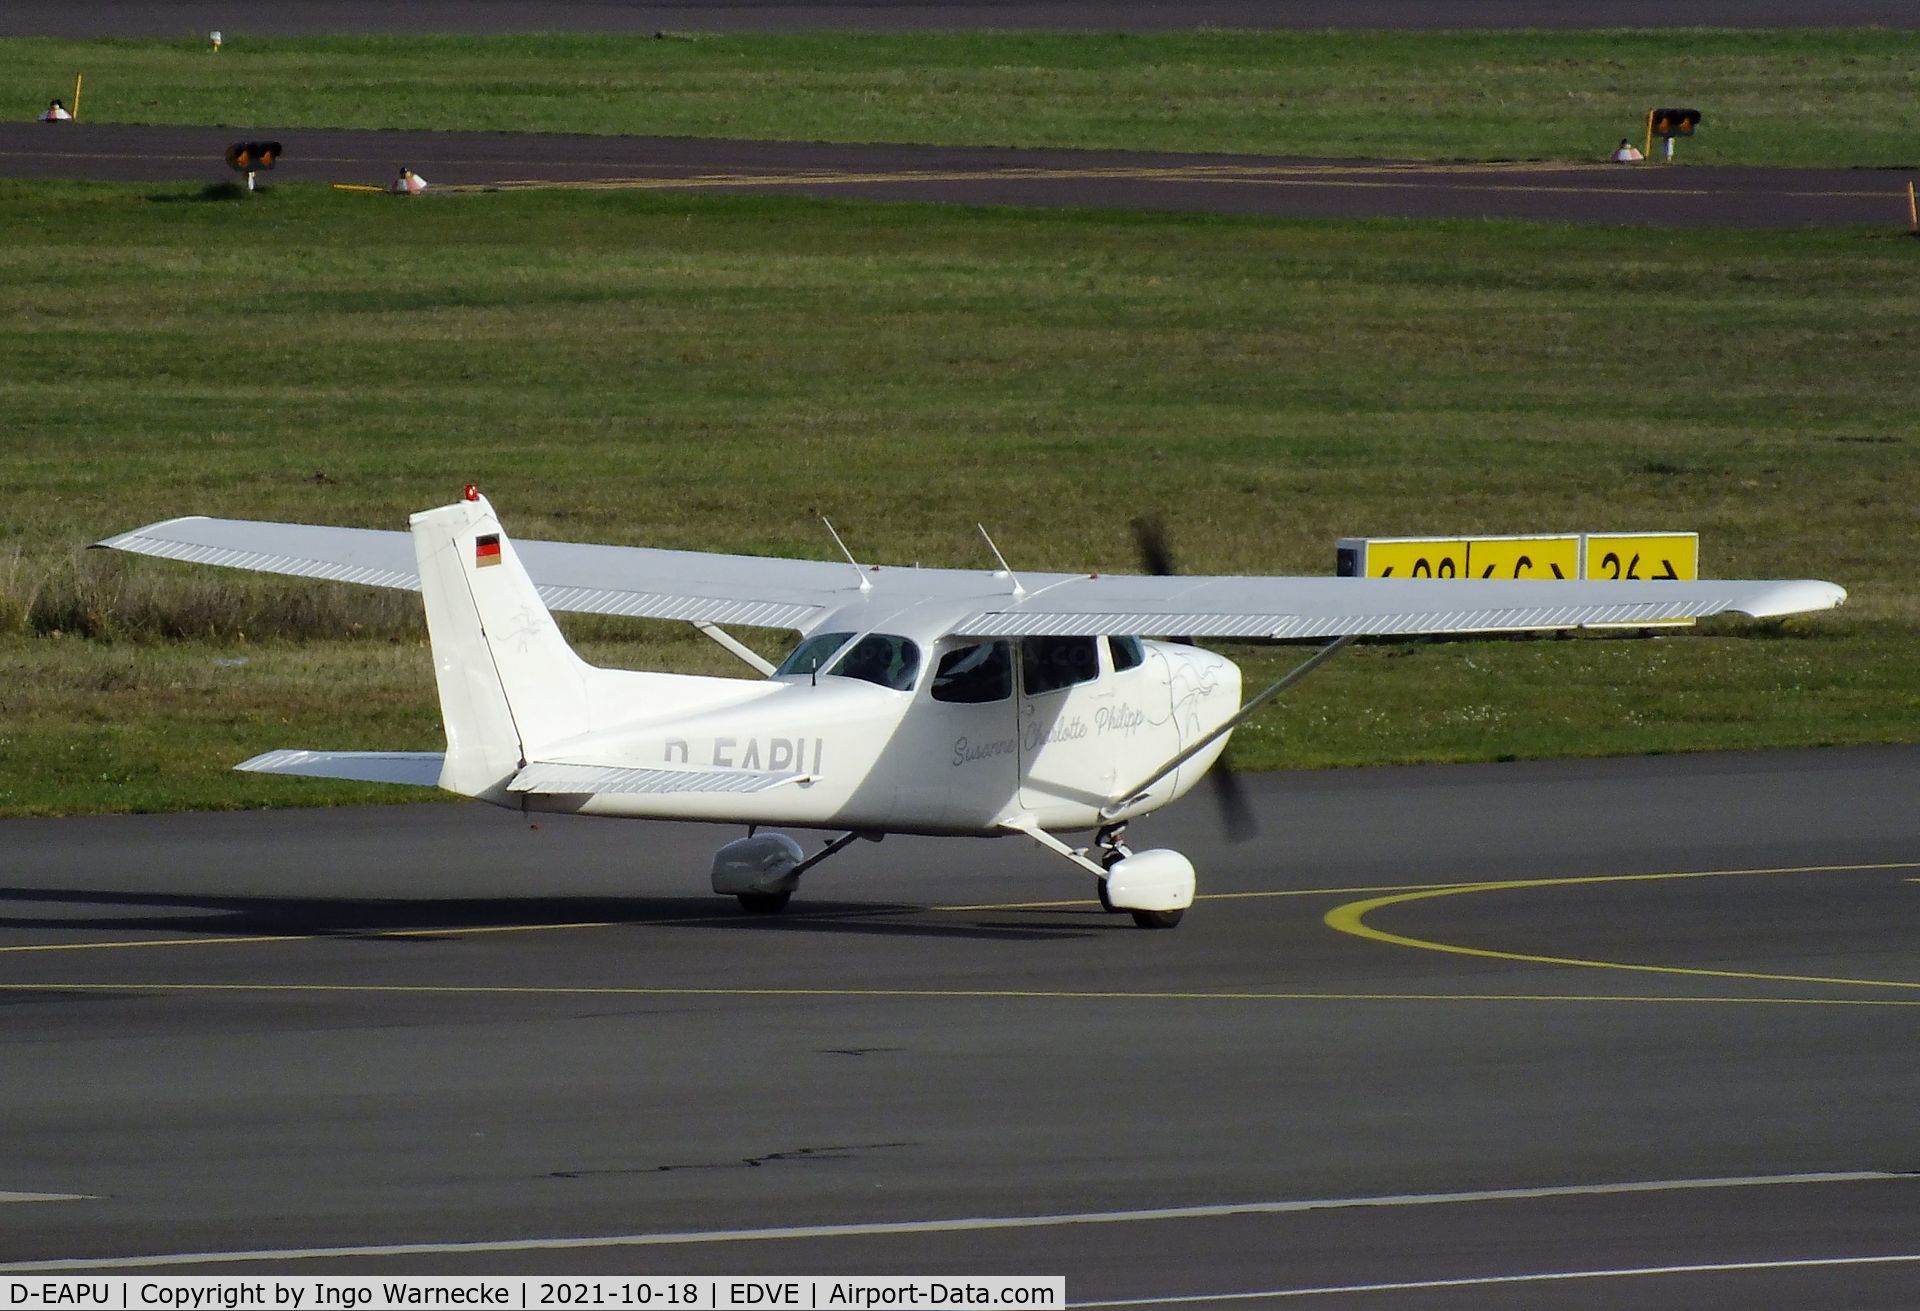 D-EAPU, 1979 Cessna 172N Skyhawk C/N 17272551, Cessna 172N Skyhawk at Braunschweig-Wolfsburg airport, Waggum